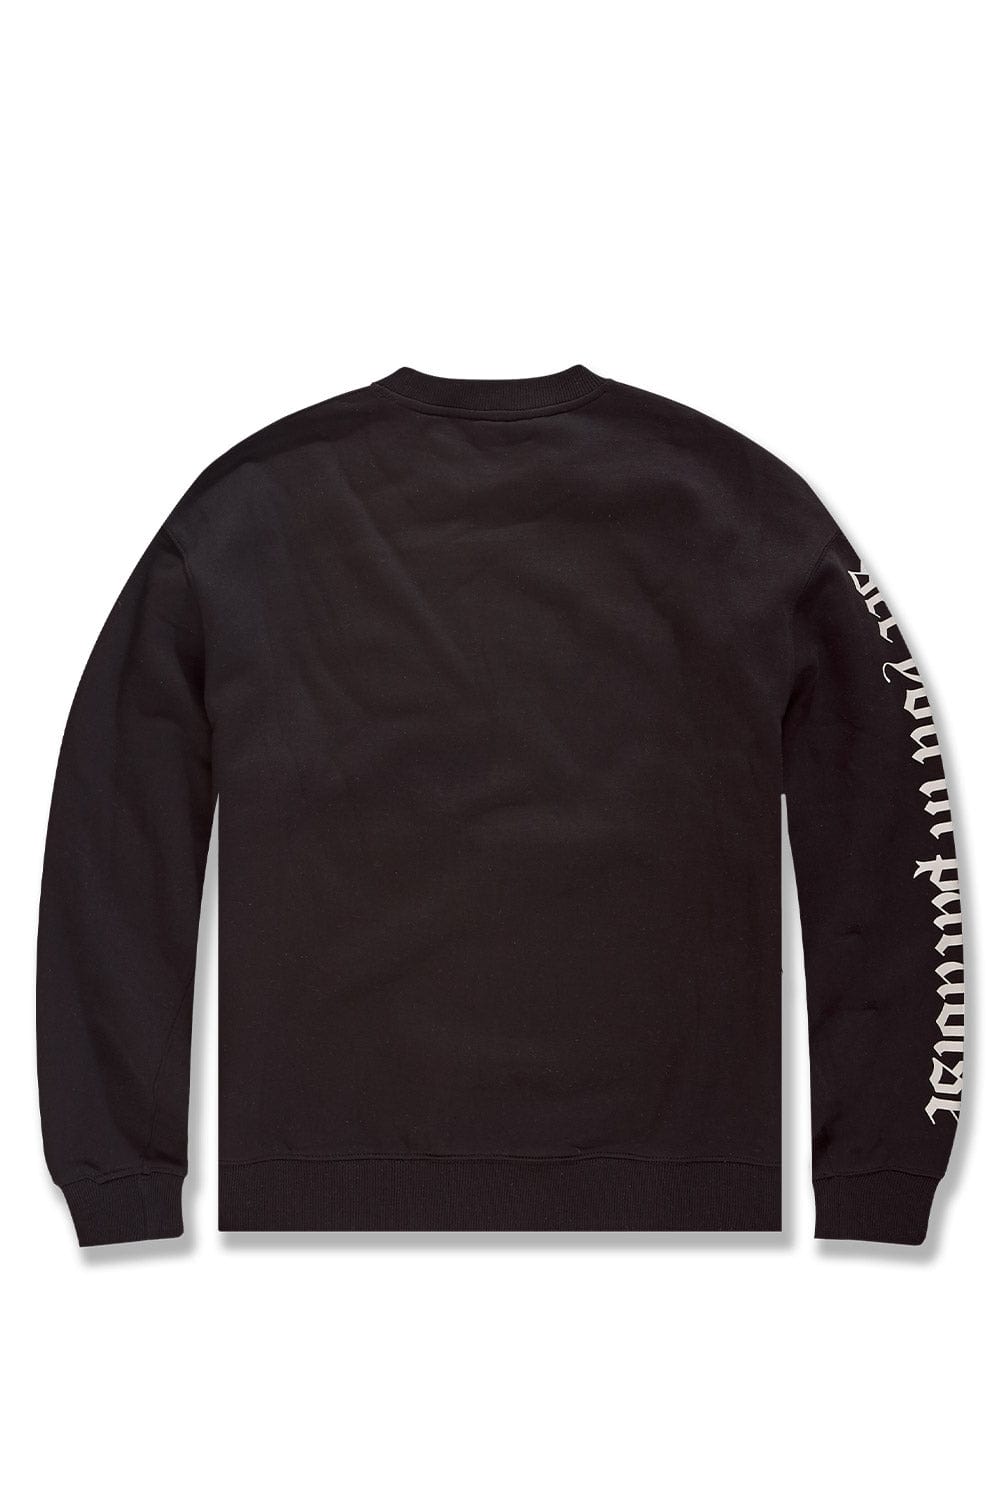 BB Blessed Crewneck Sweatshirt (Black)